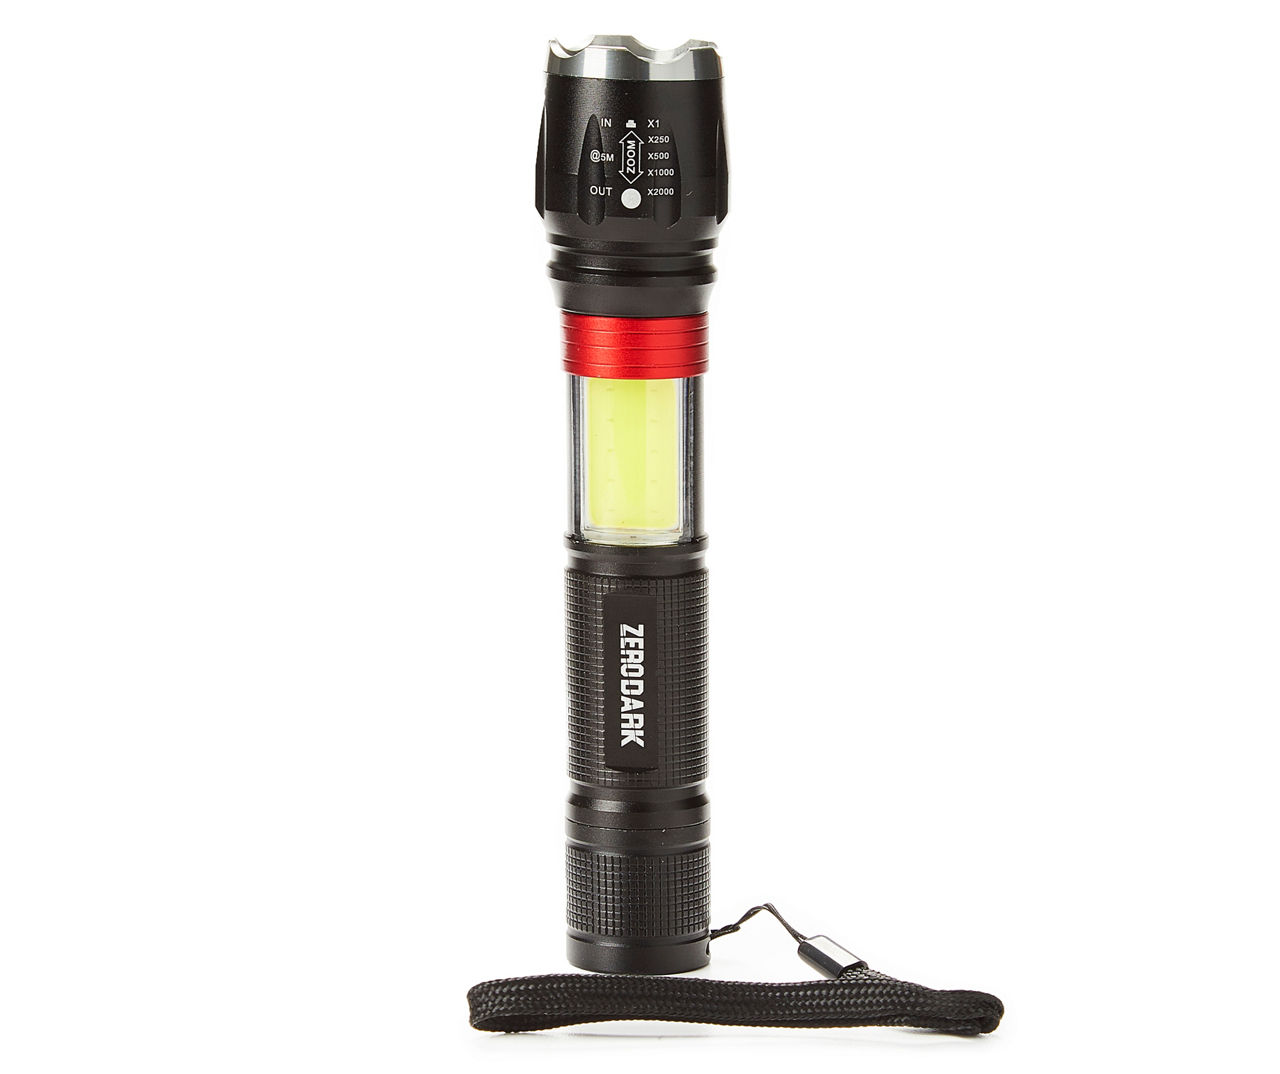 Emergency LED AA Light All-in-One LED Flashlight and Lantern